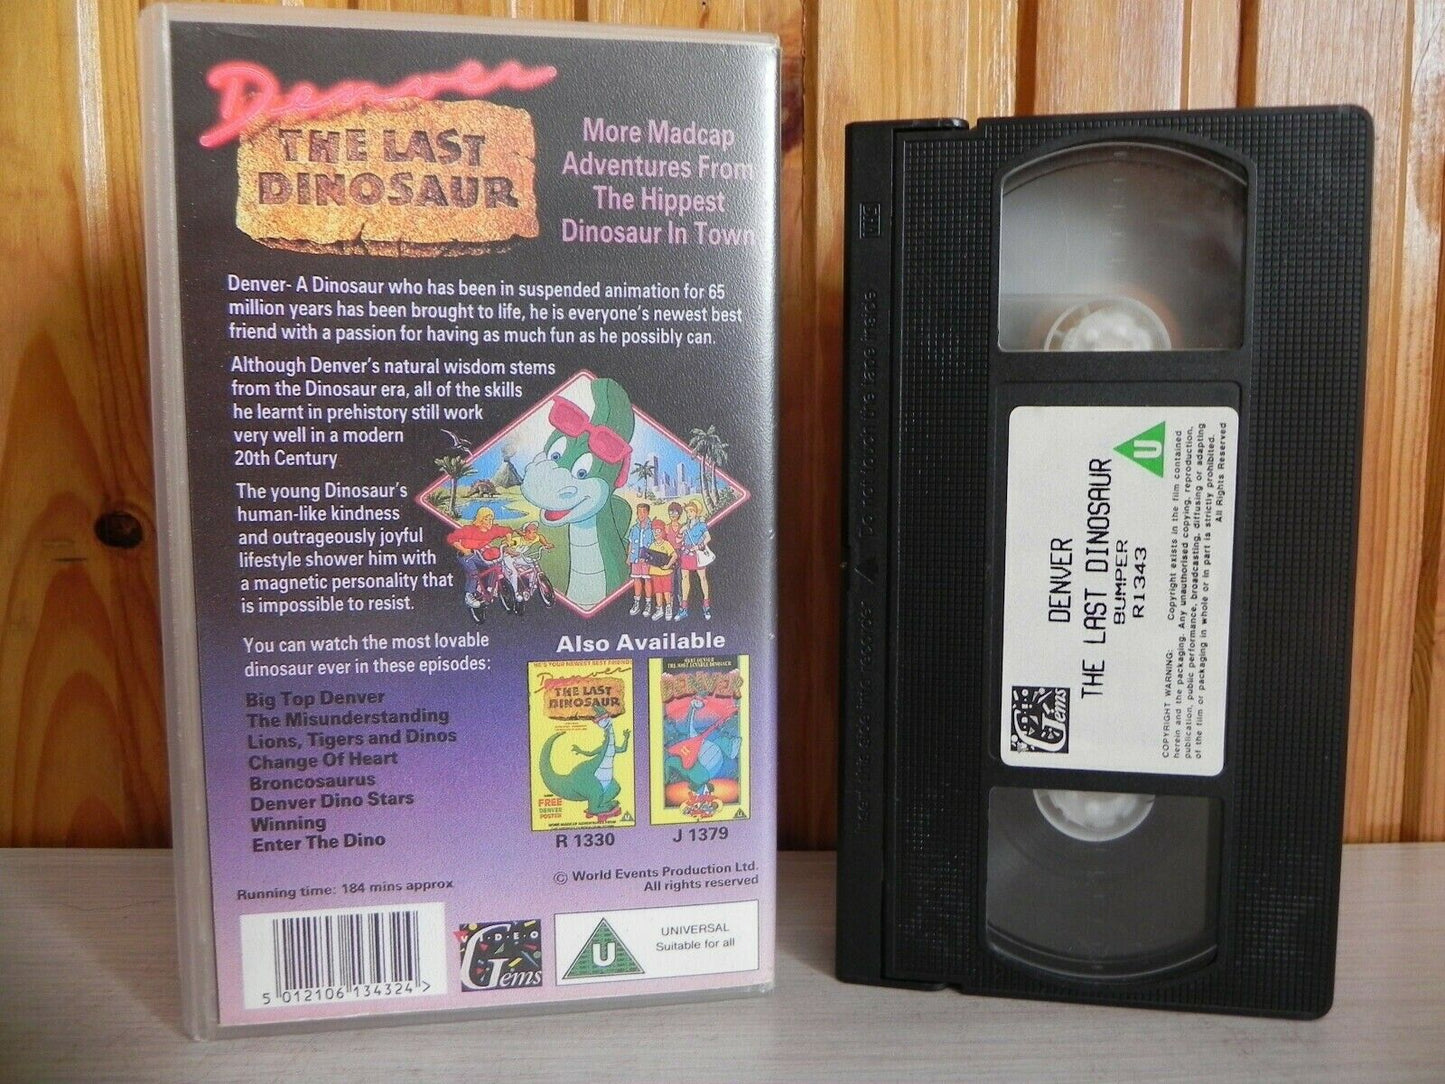 Denver The Last Dinosaur - 3 Hours - Bumper Edition - 8 Episodes - Cartoon - VHS-